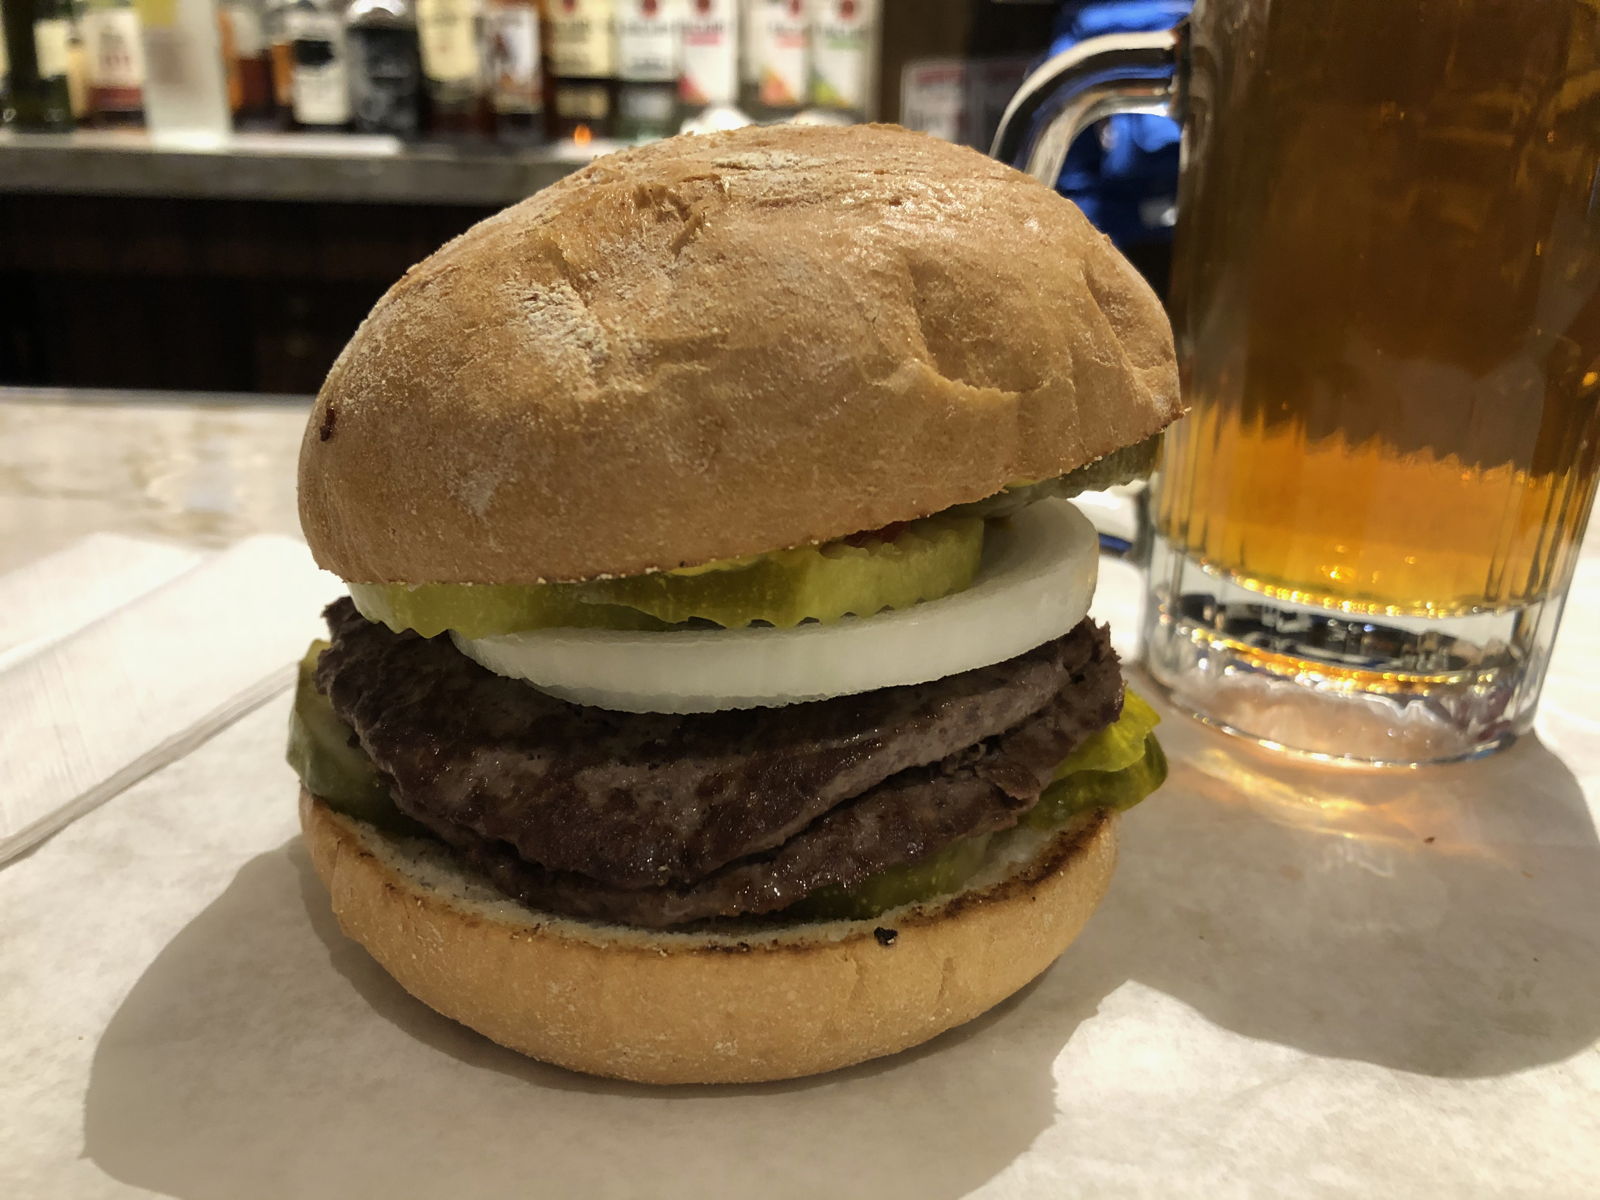 Billy Goat Tavern burger: Handmade burger from the Original Billy Goat in Chicago.; hamburger; Chicago; The Billy Goat Tavern